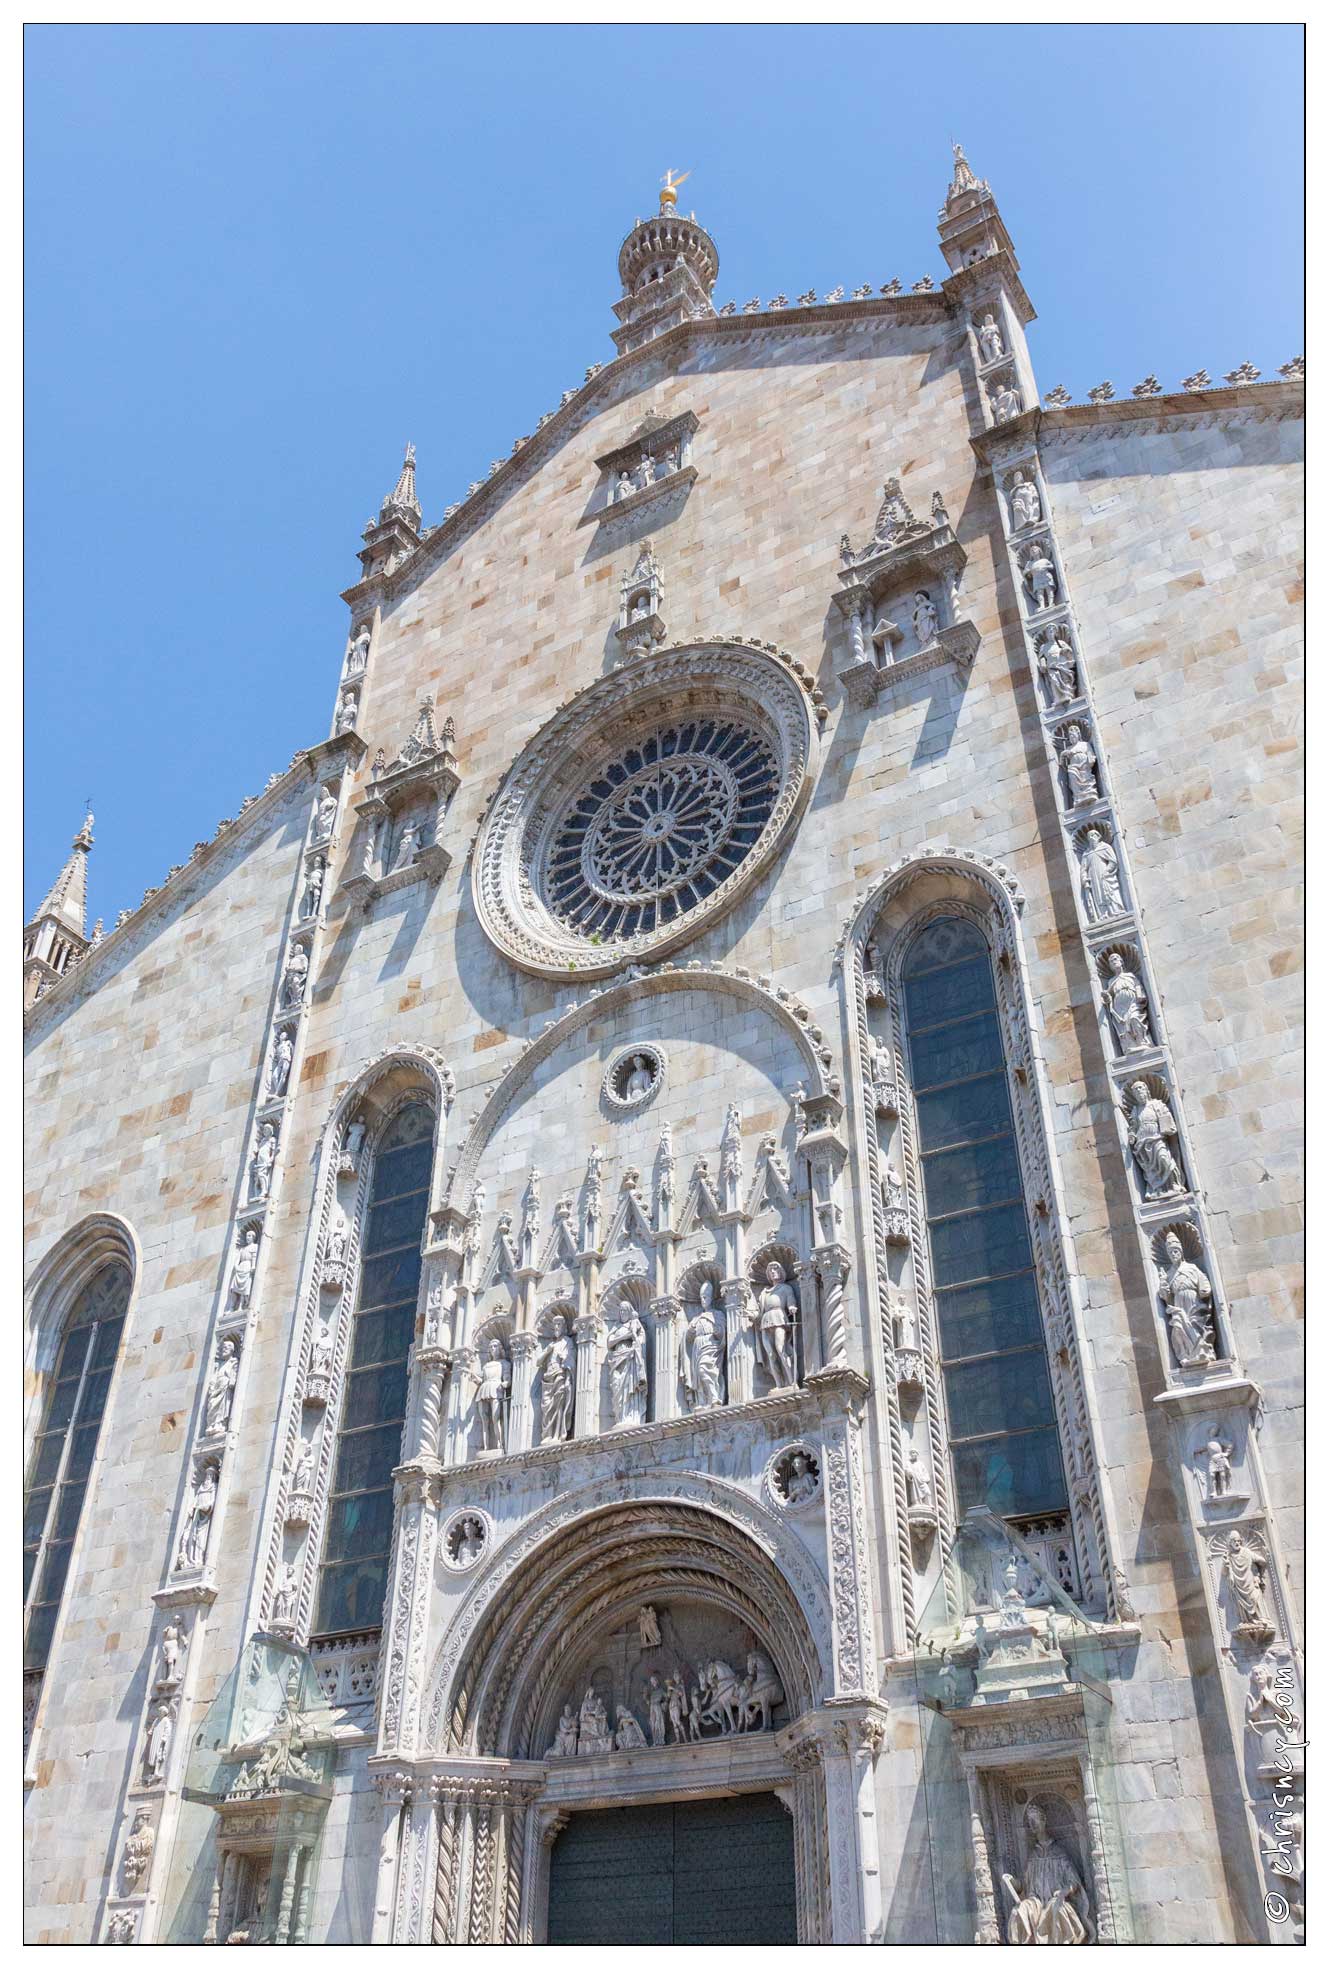 20190602-028_6596-Come_Cathedrale_di_Santa_Maria_Assunta.jpg